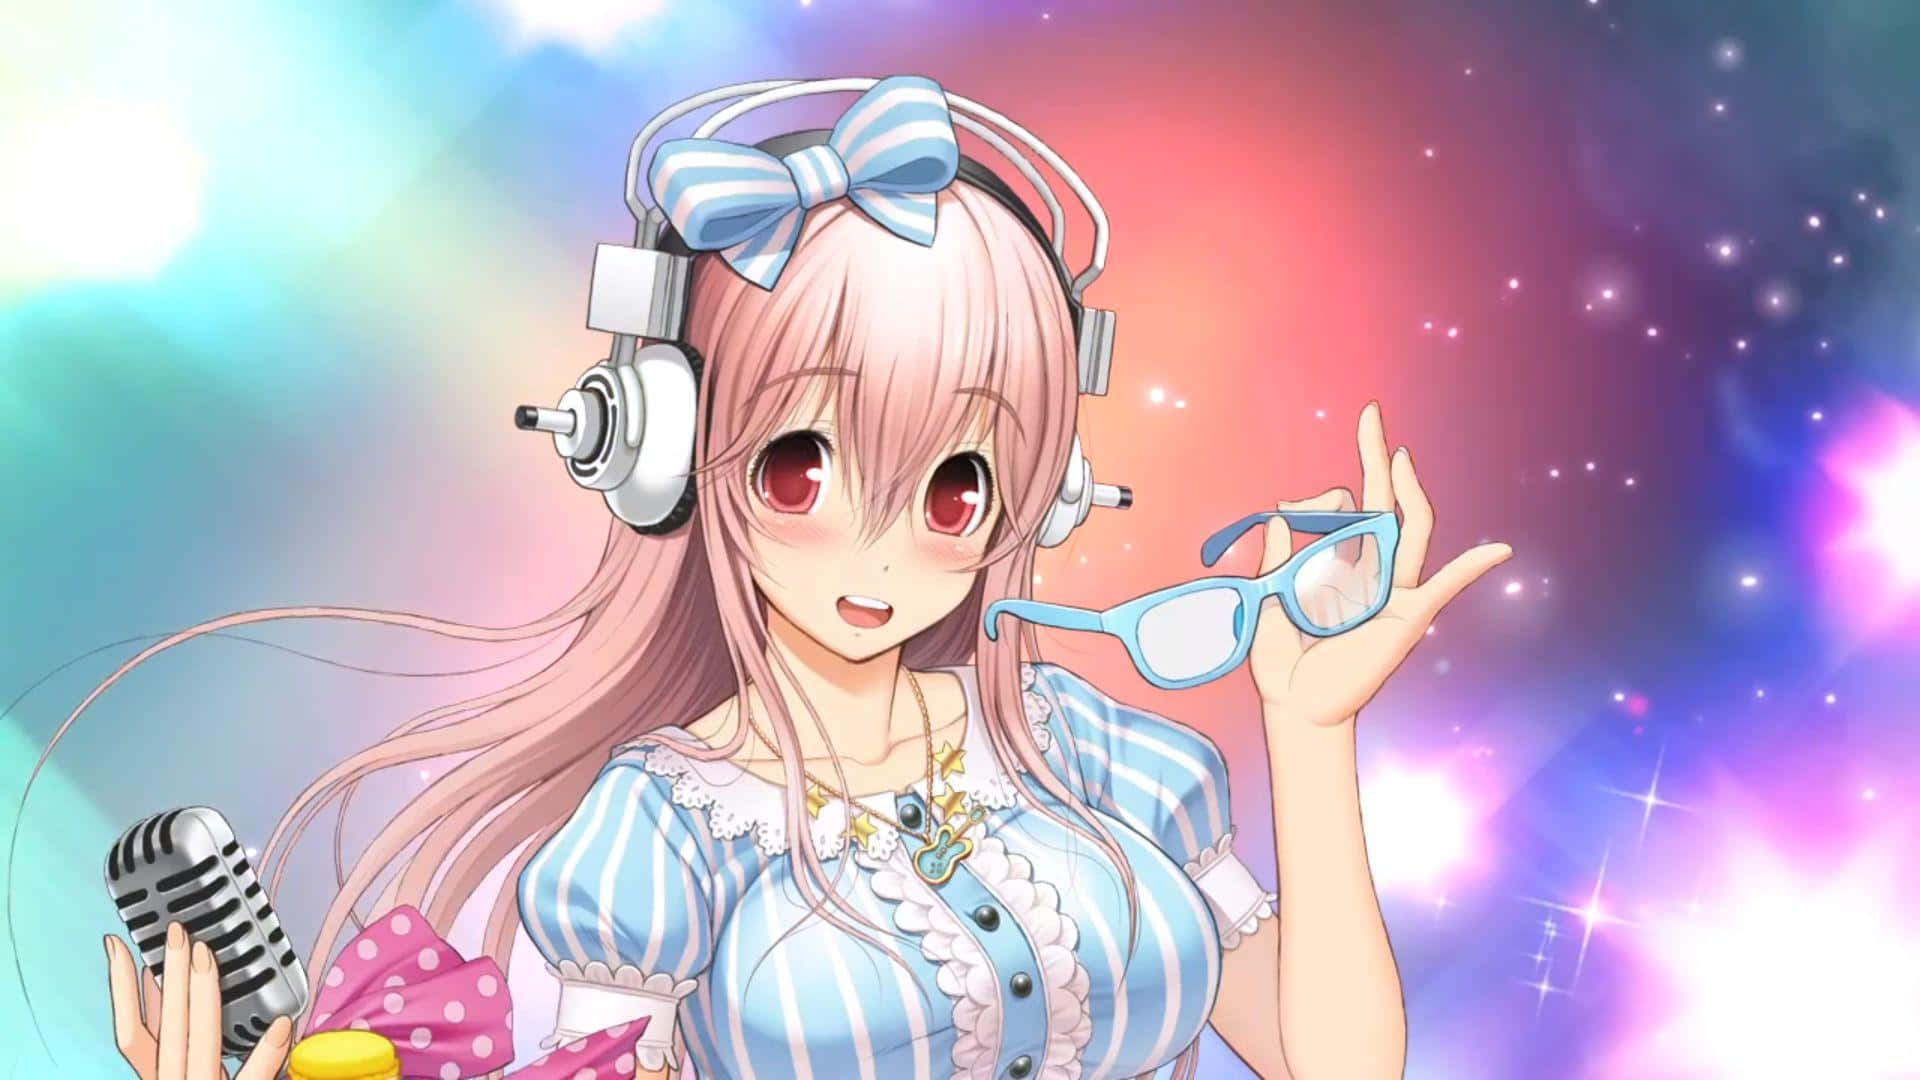 Cutecore Music Star Anime Girl Wallpaper